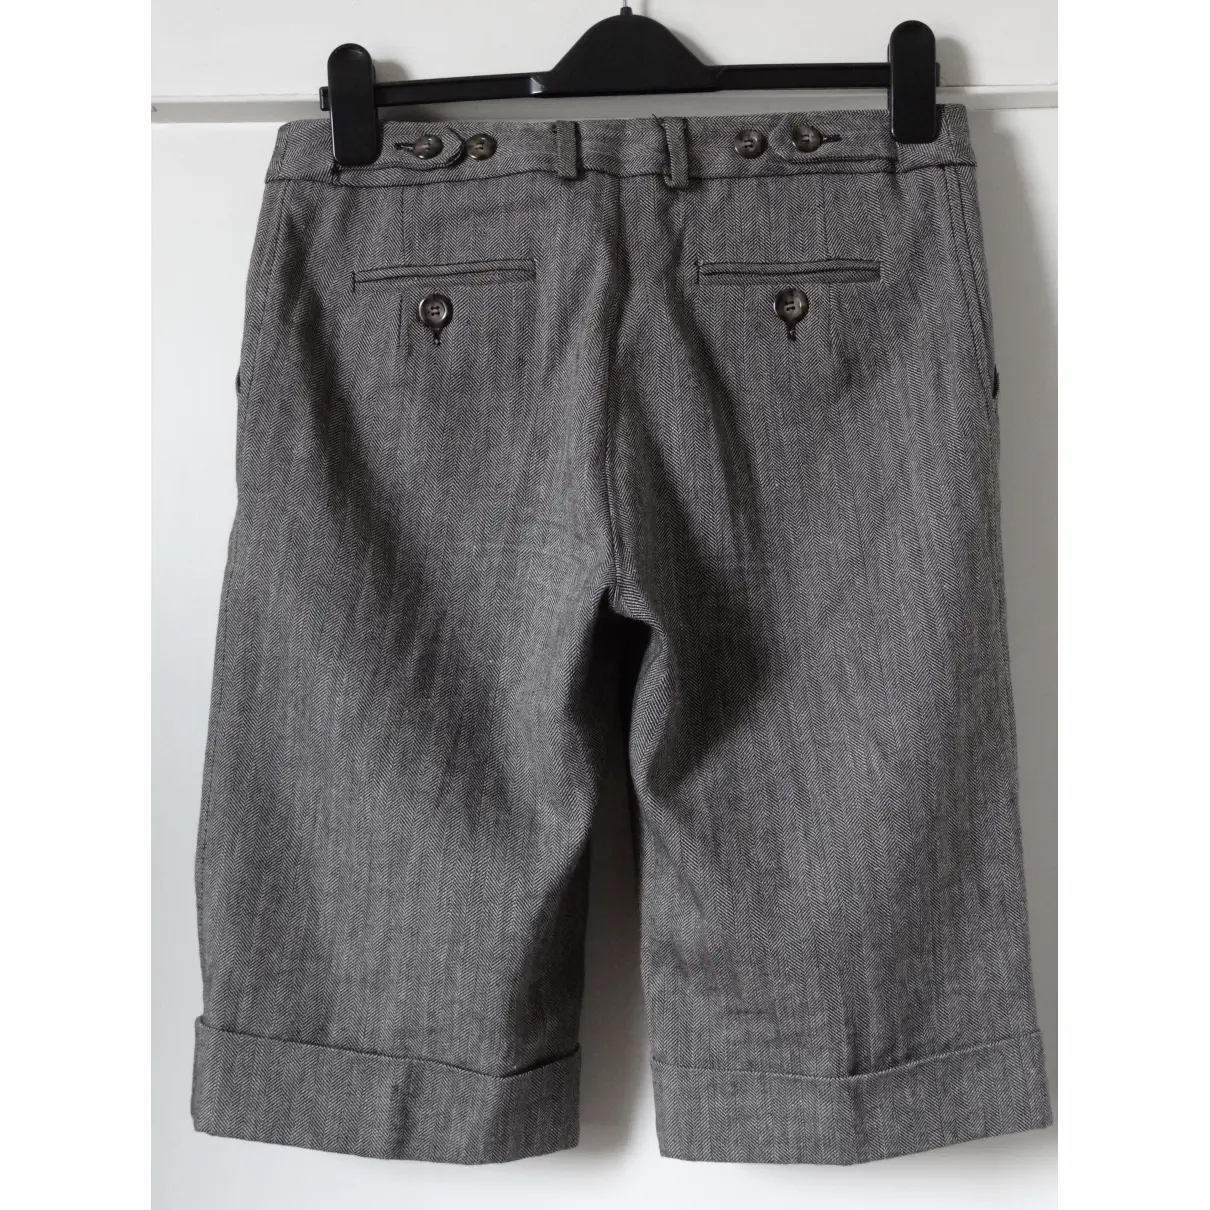 Buy Max Mara Weekend Grey Cotton Shorts online